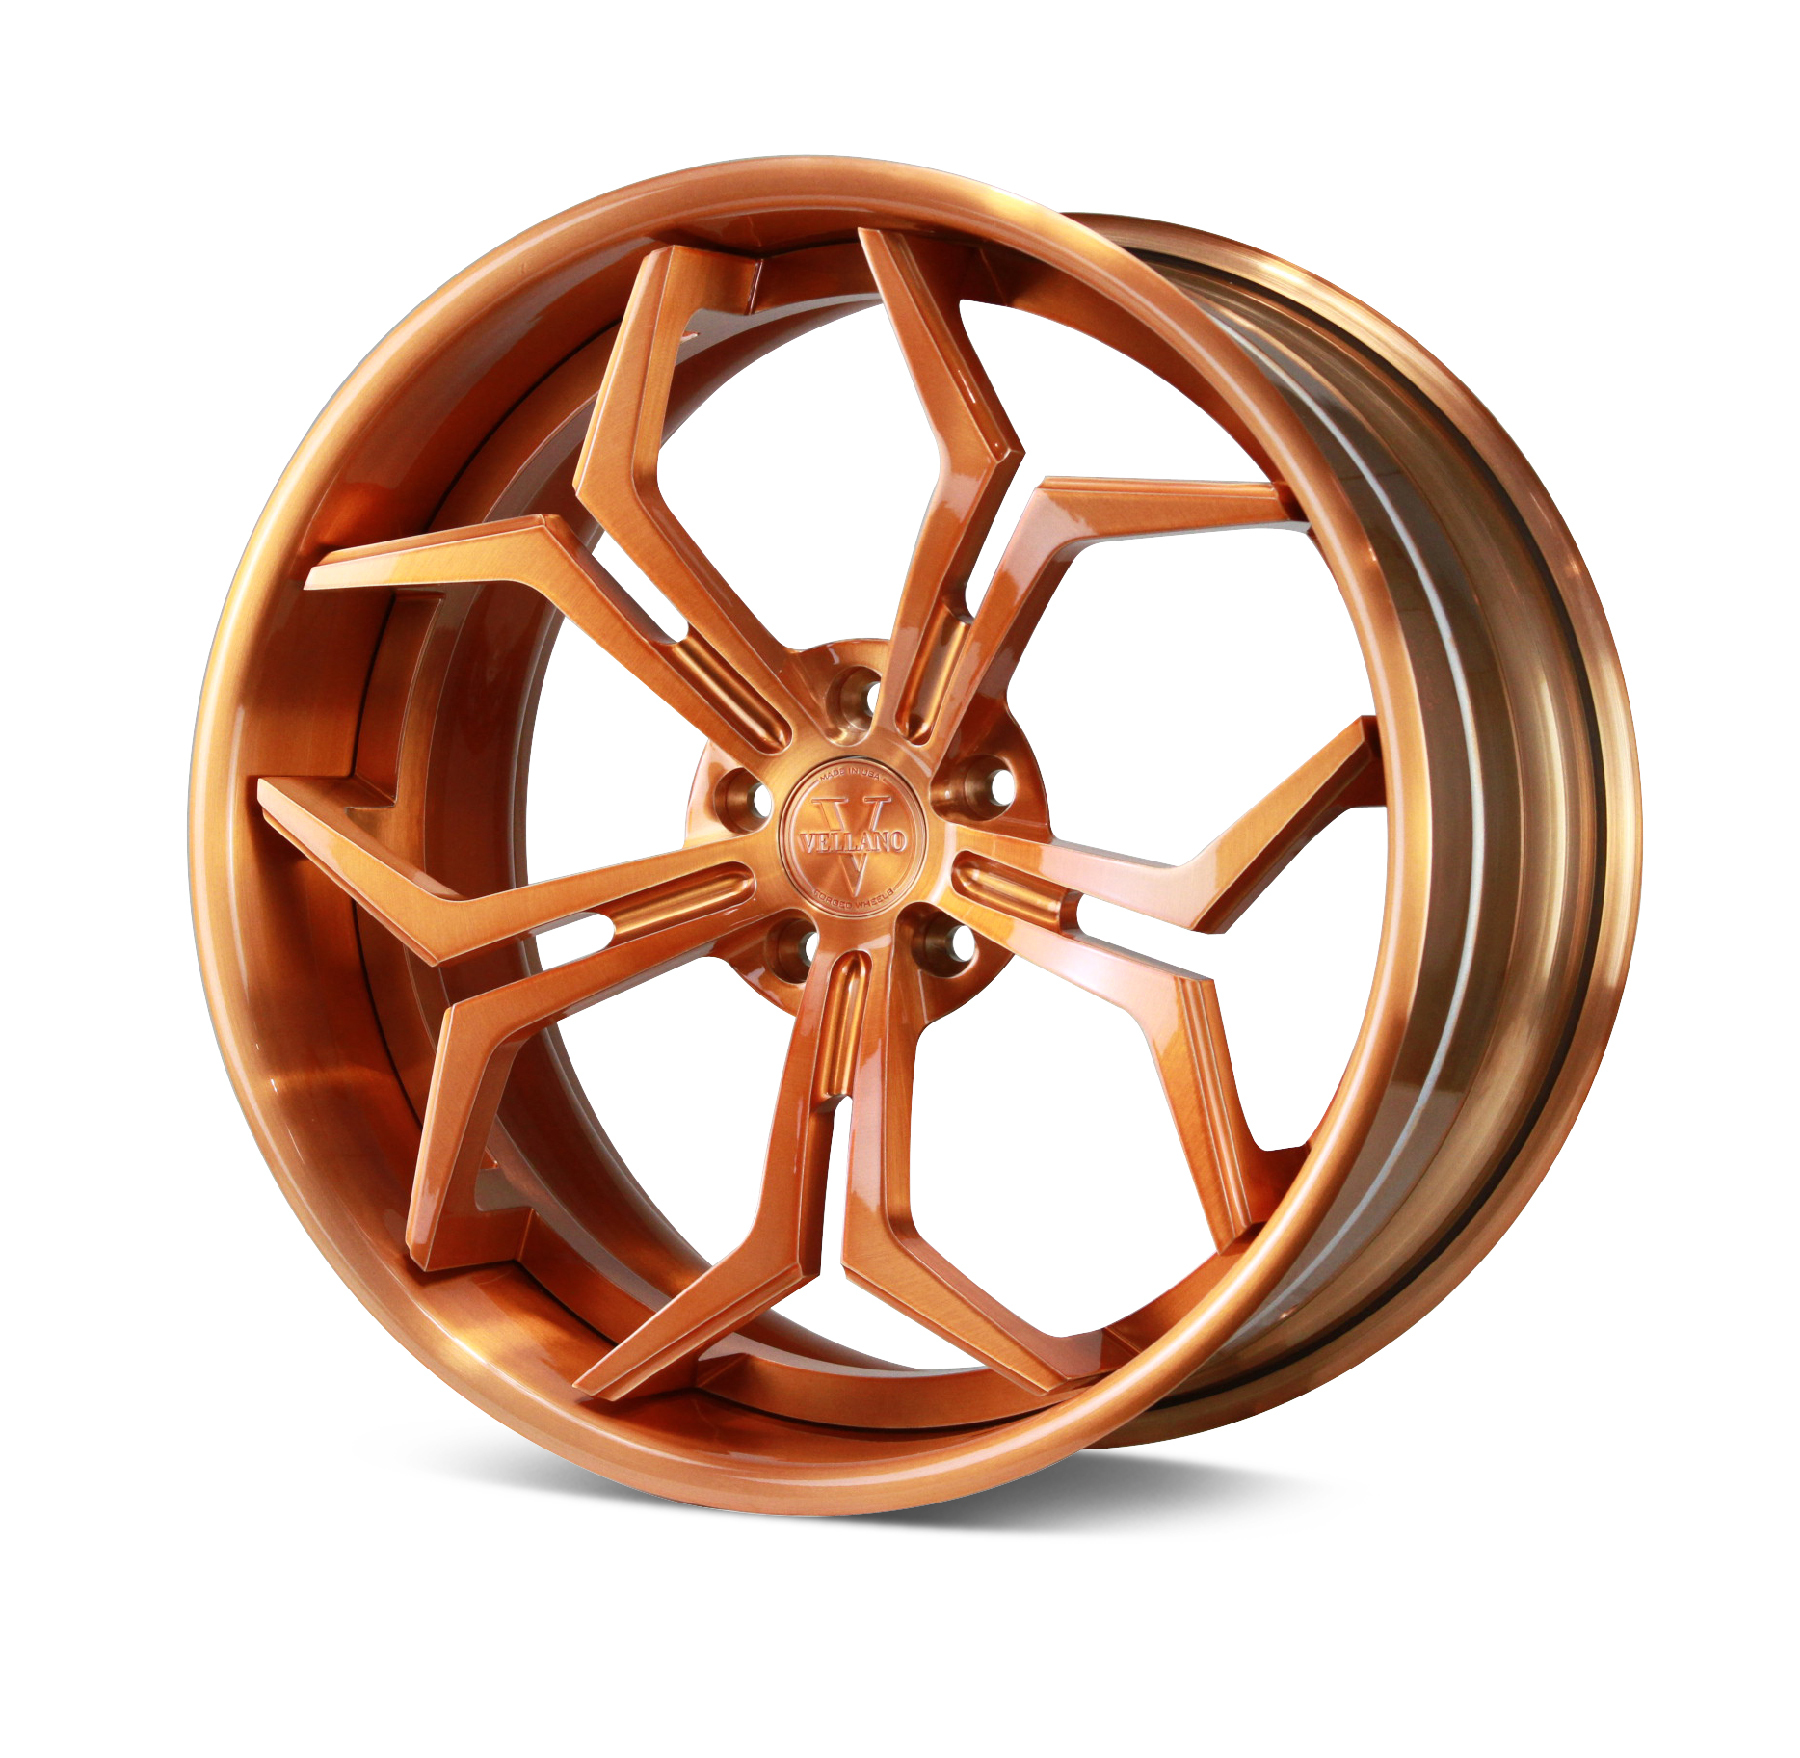 Vellano VCX forged wheels